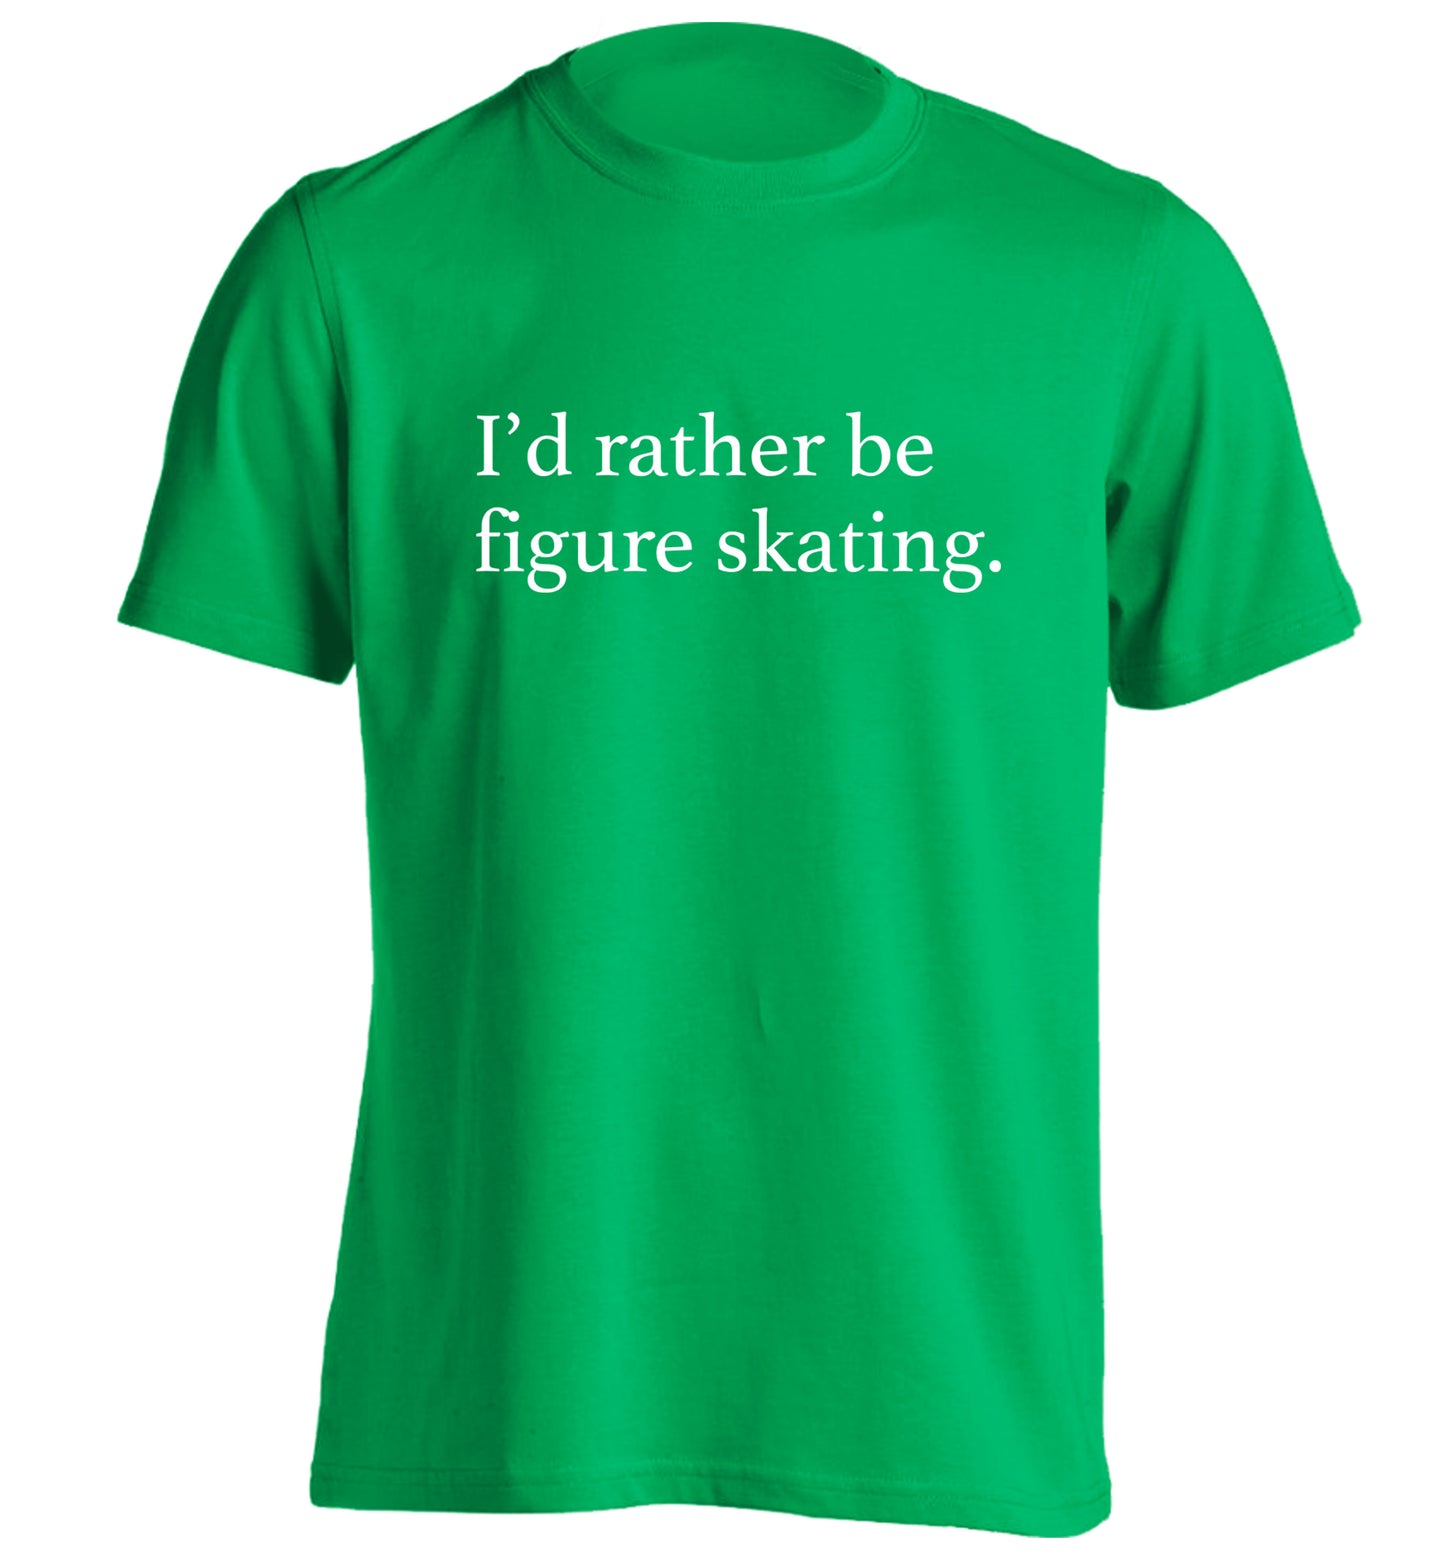 I'd rather be figure skating adults unisexgreen Tshirt 2XL